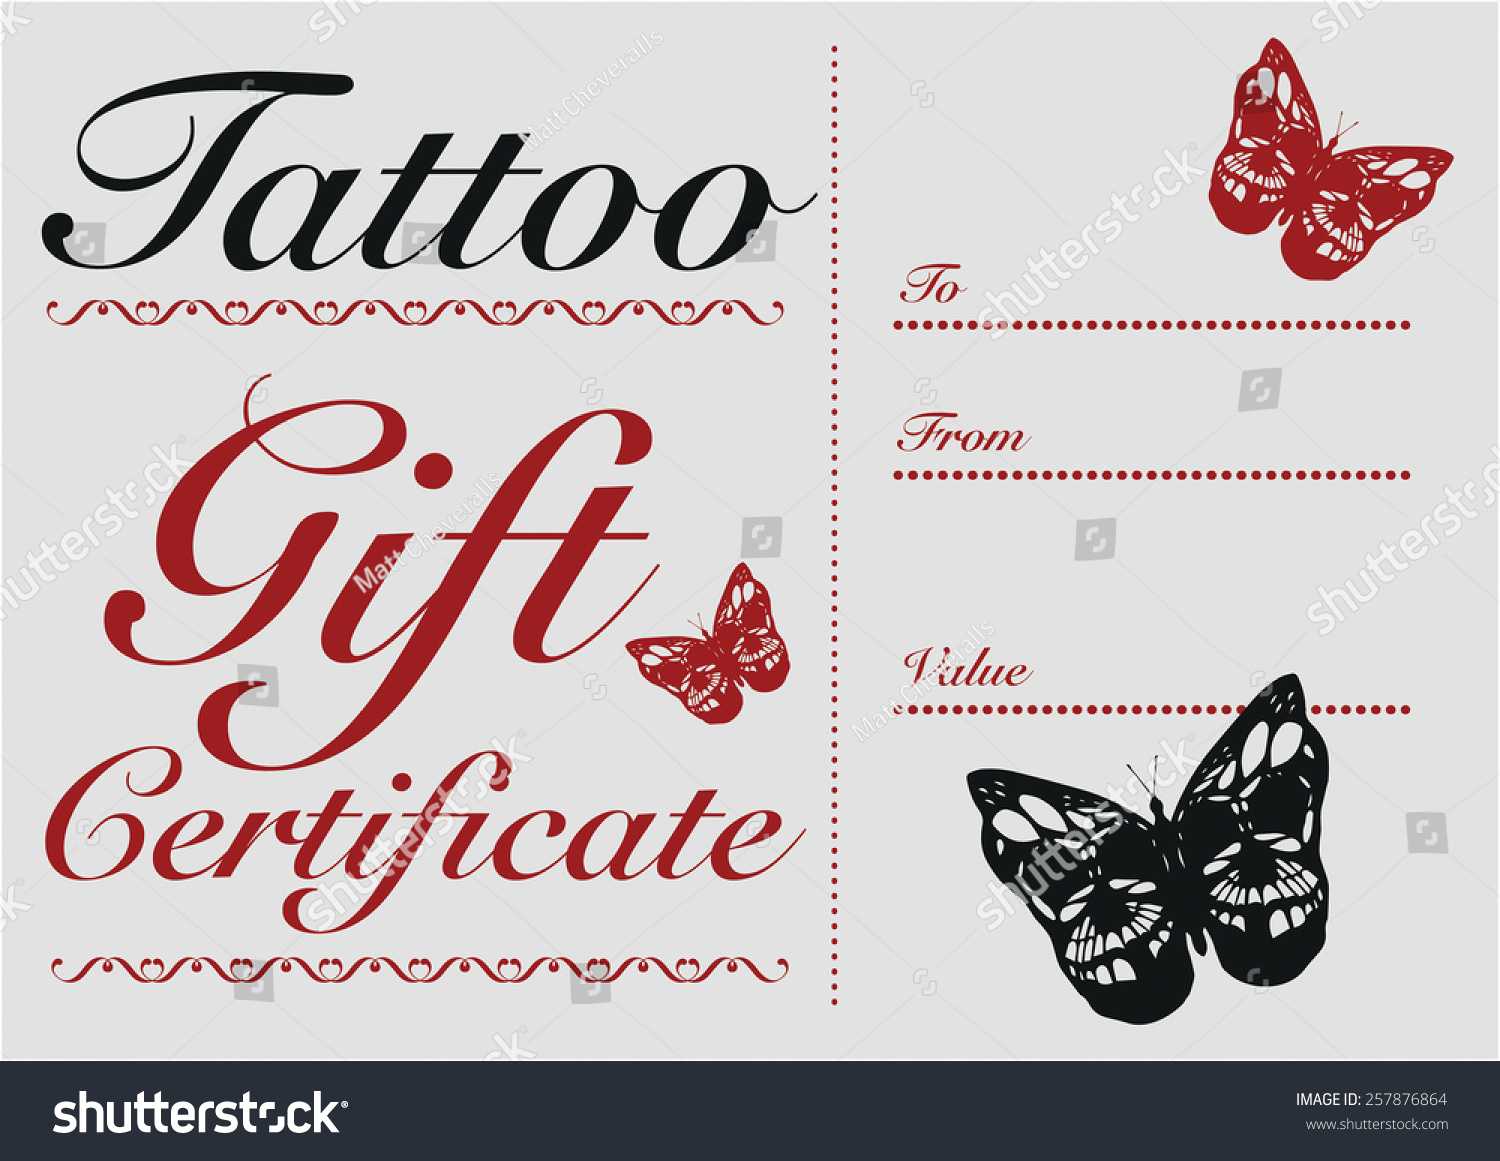 Tattoo Gift Certificate Template Free Inside Tattoo Gift Certificate Template